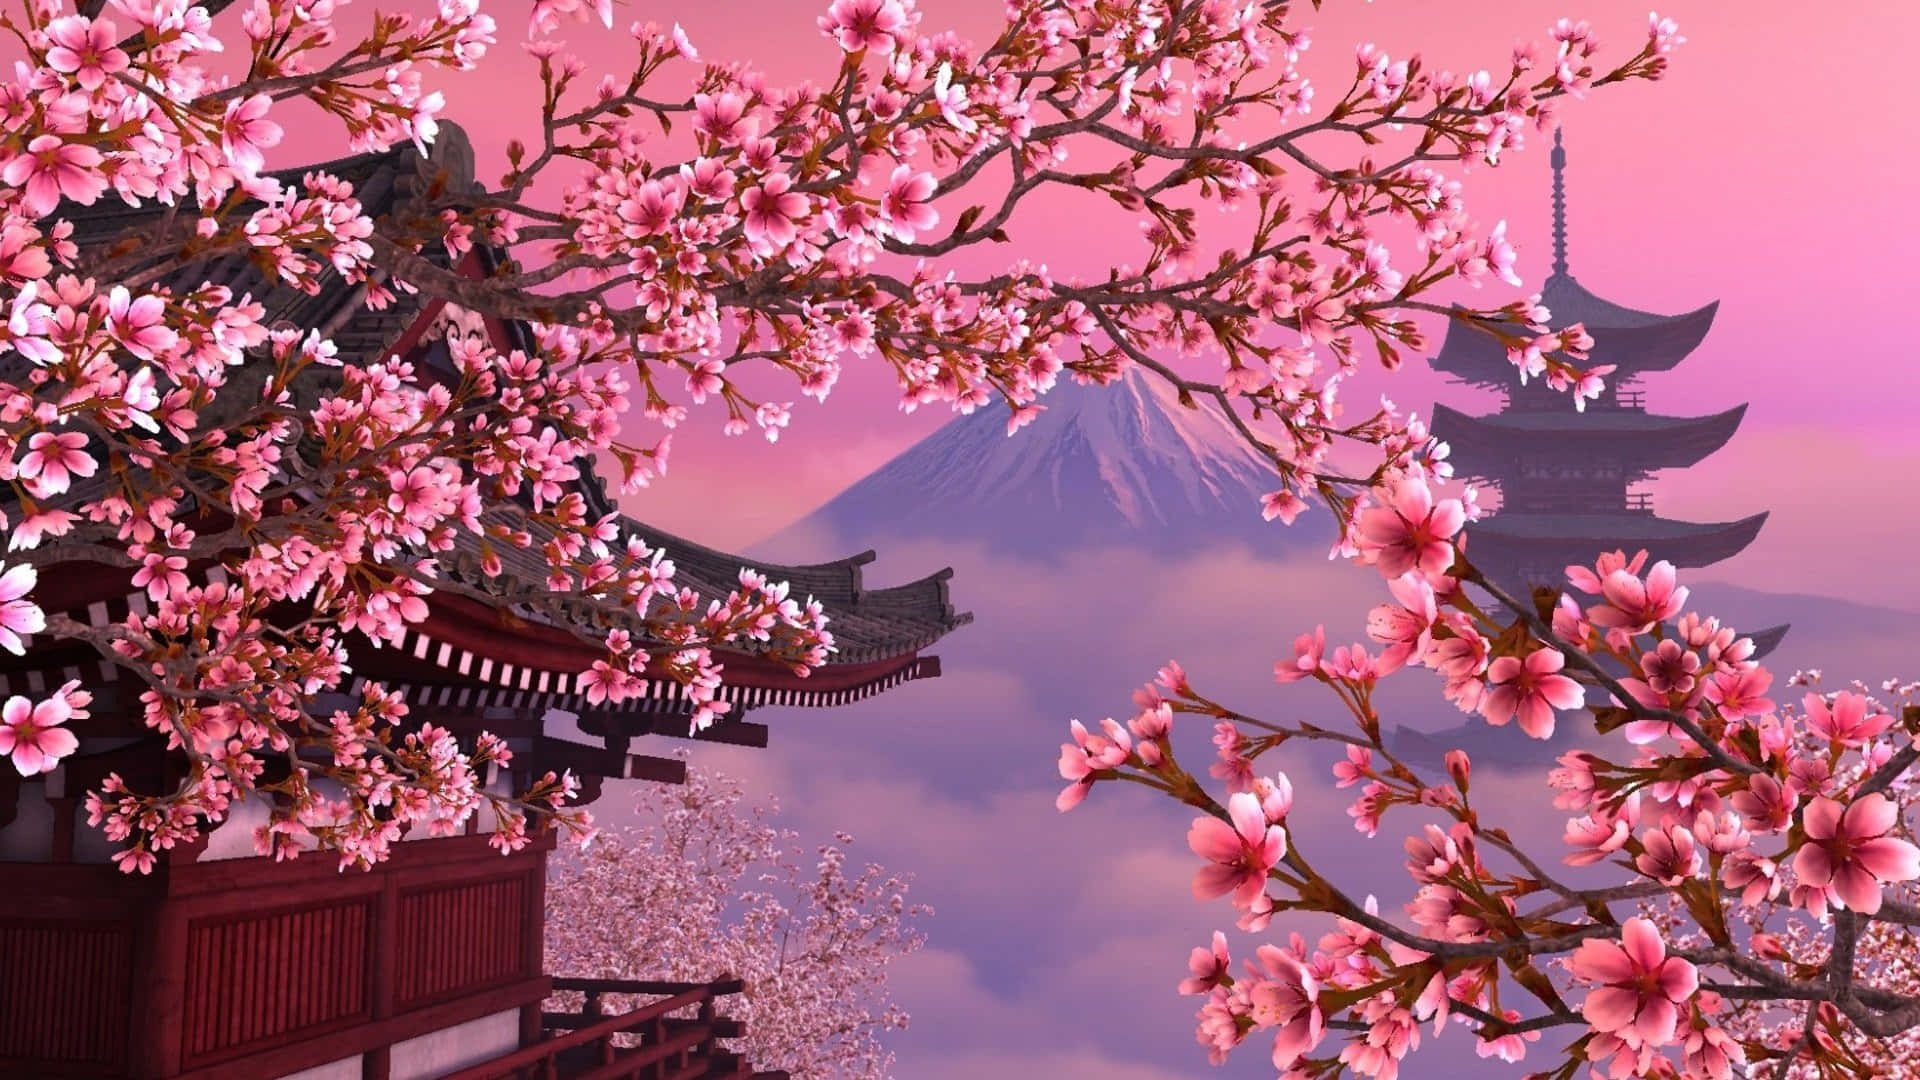 A cluster of soft pink cherry blossom petals Wallpaper